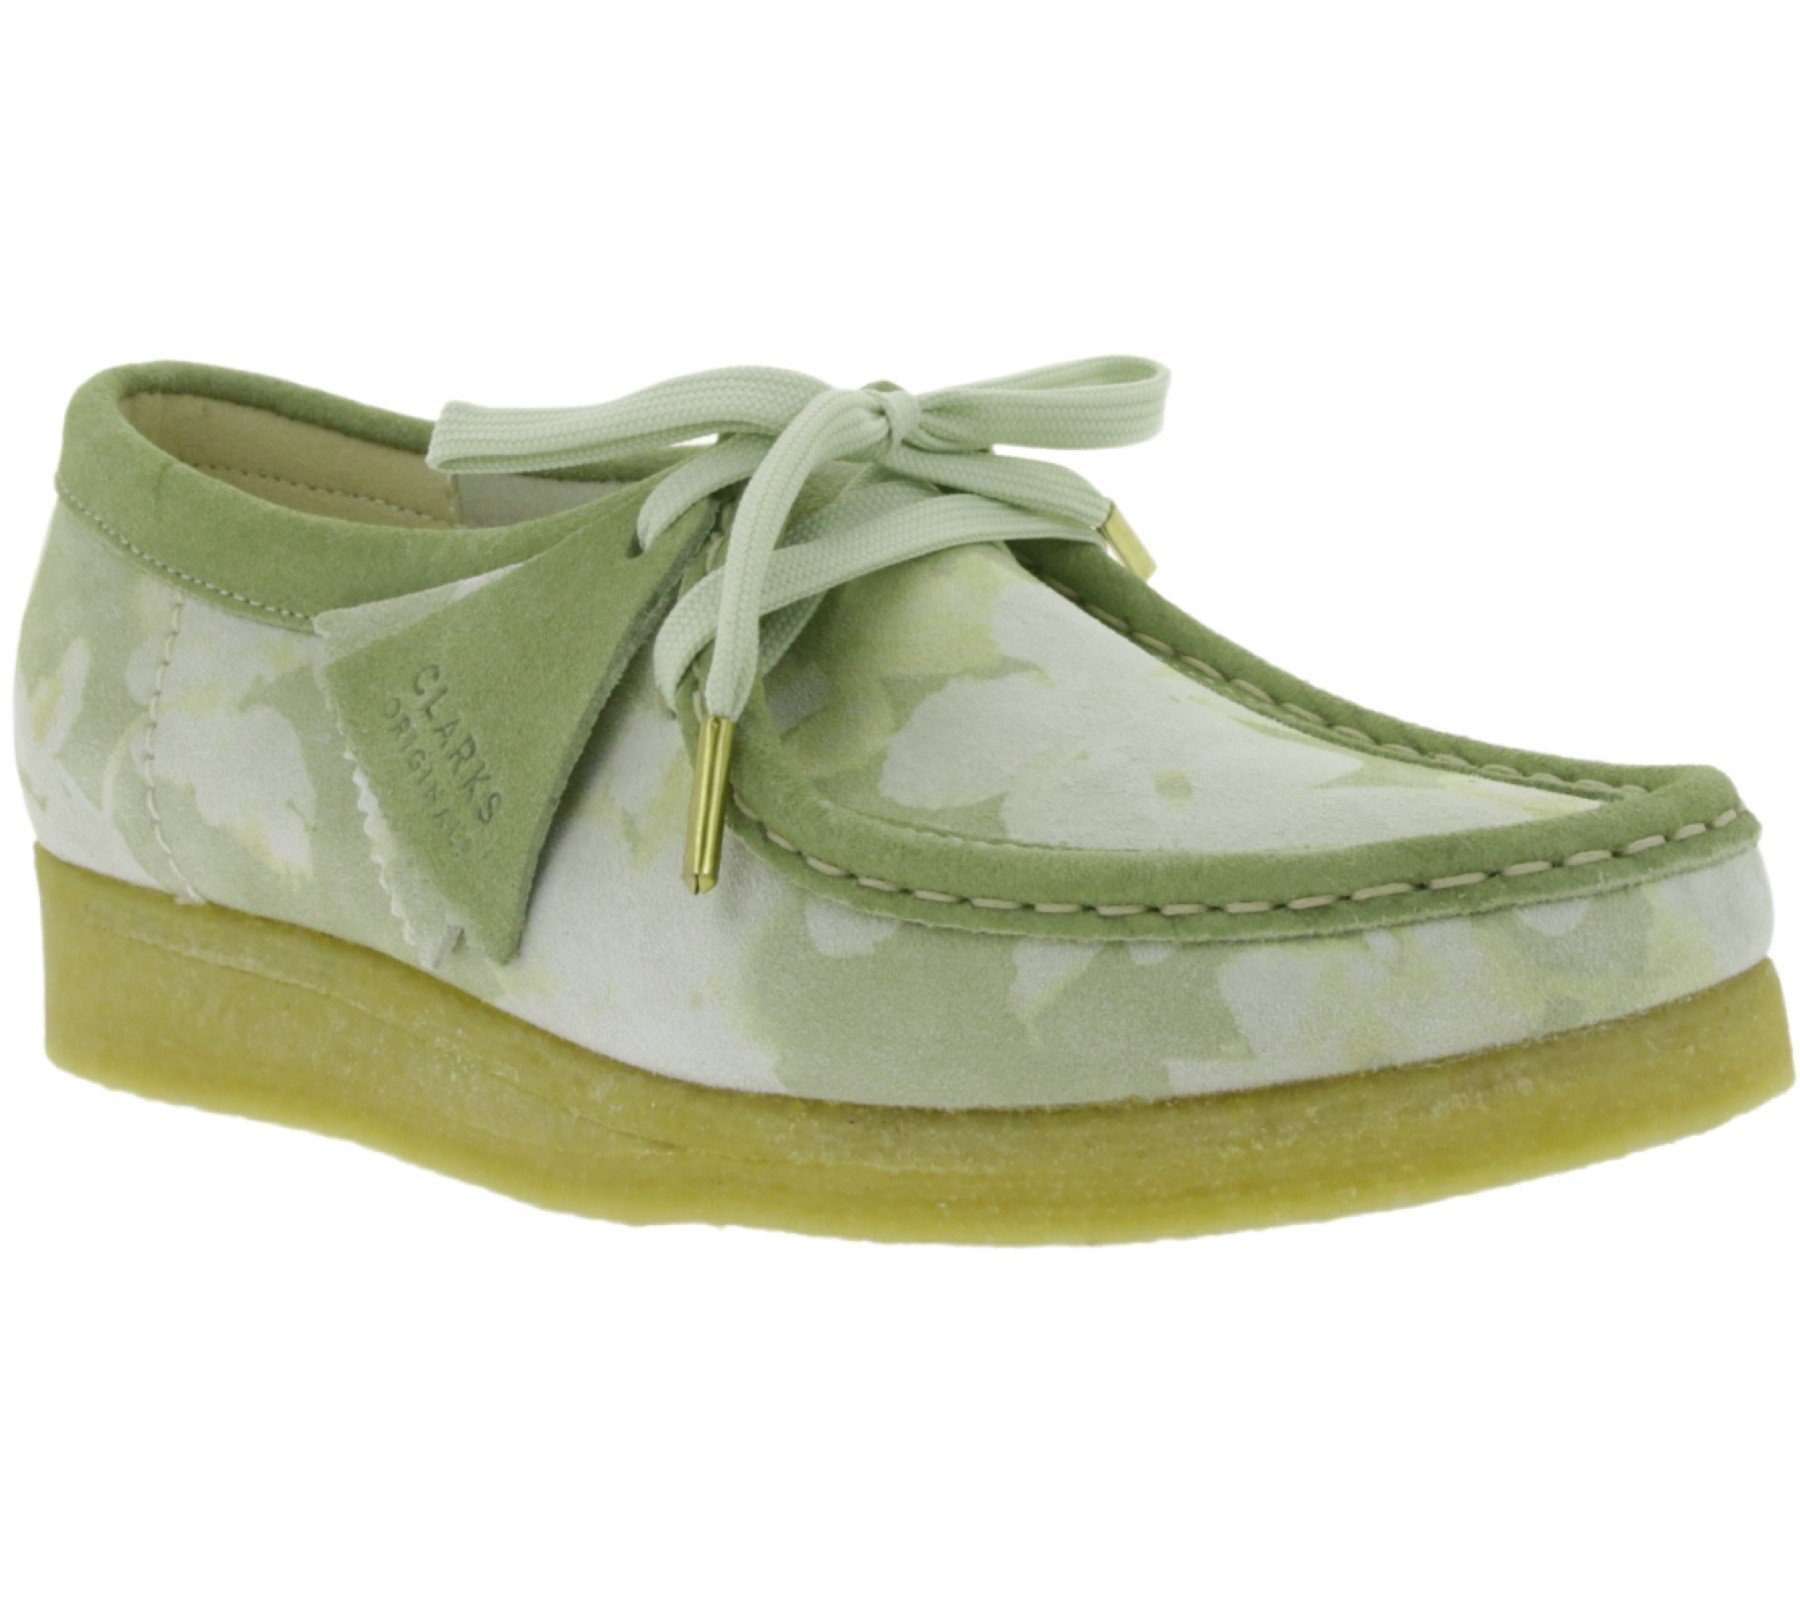 Clarks Clarks Originals Damen Schnürschuhe Grün Halbschuhe Echtleder-Bootsschuhe floralem Muster Schnürschuh Wallabee mit